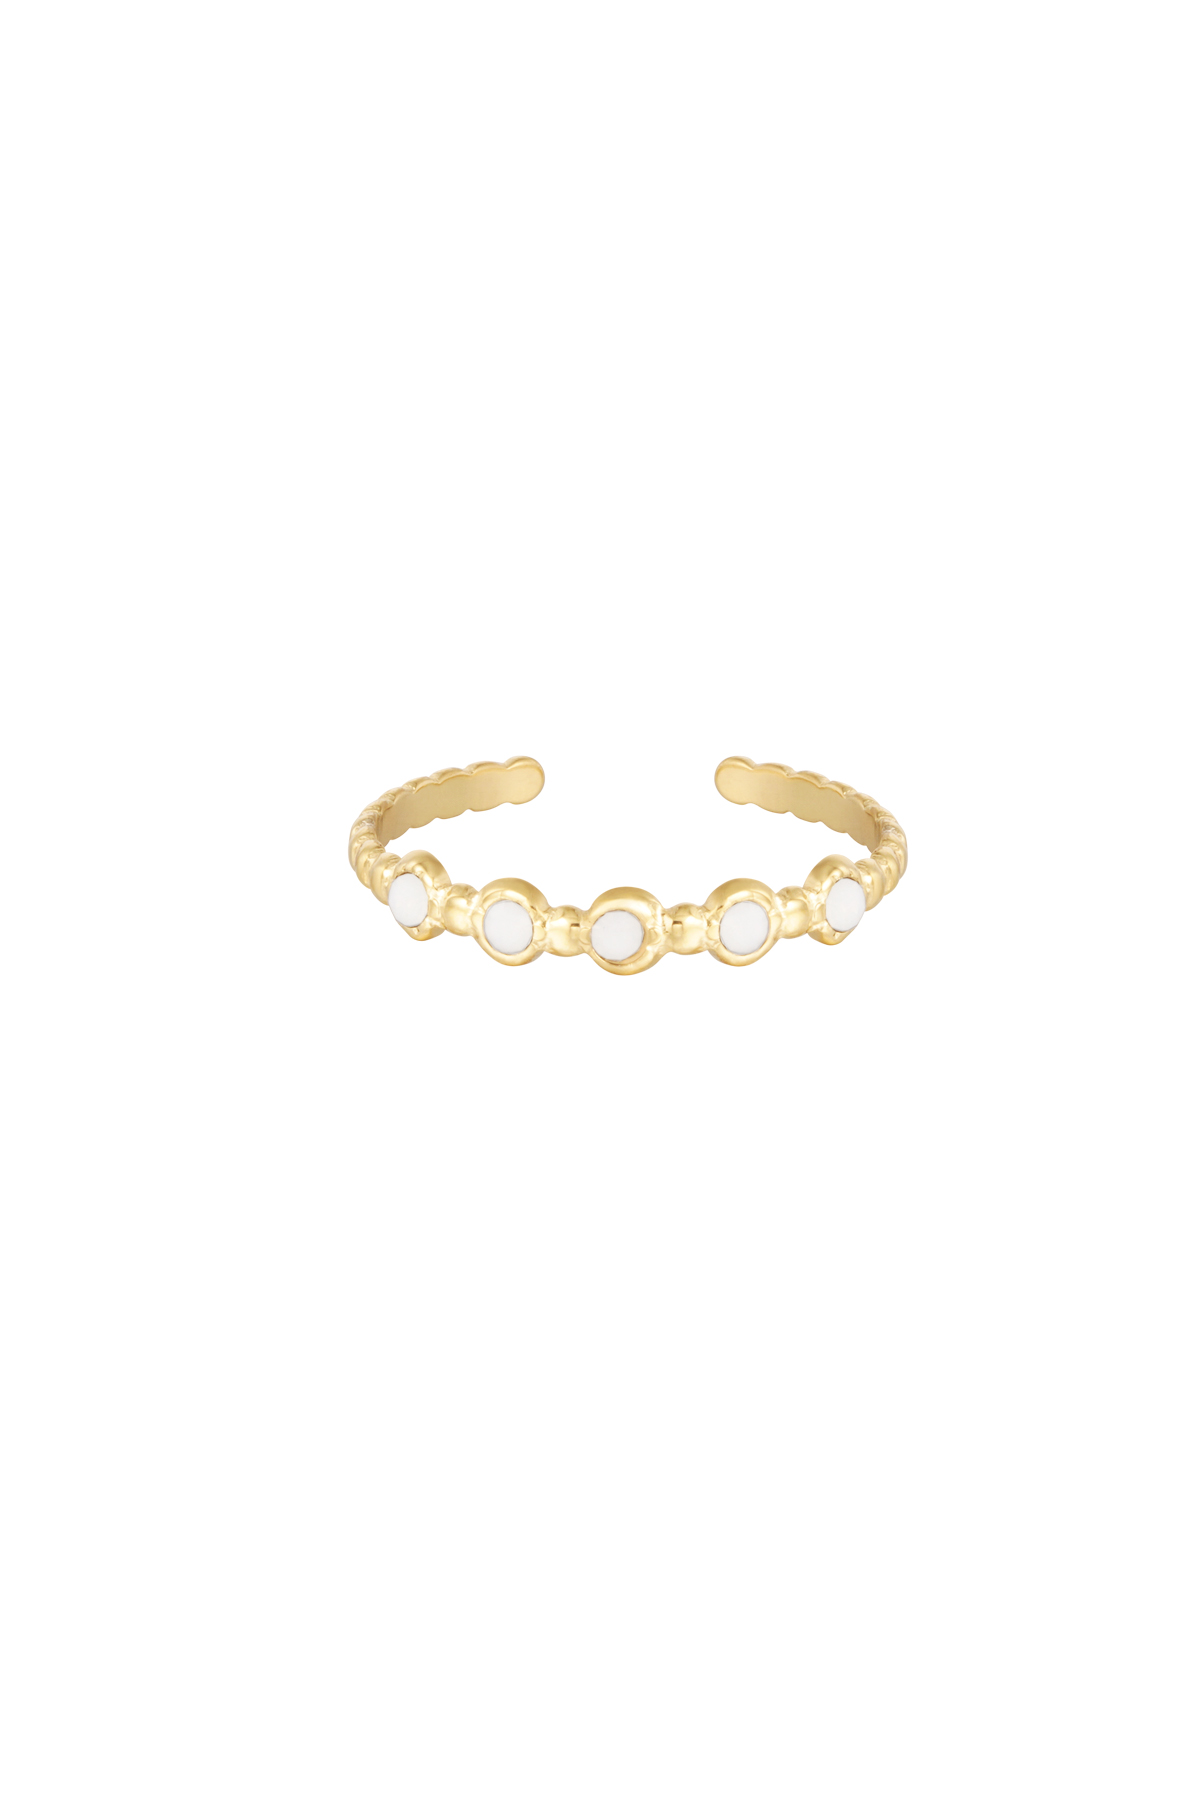 Ring steentjes - goud/wit